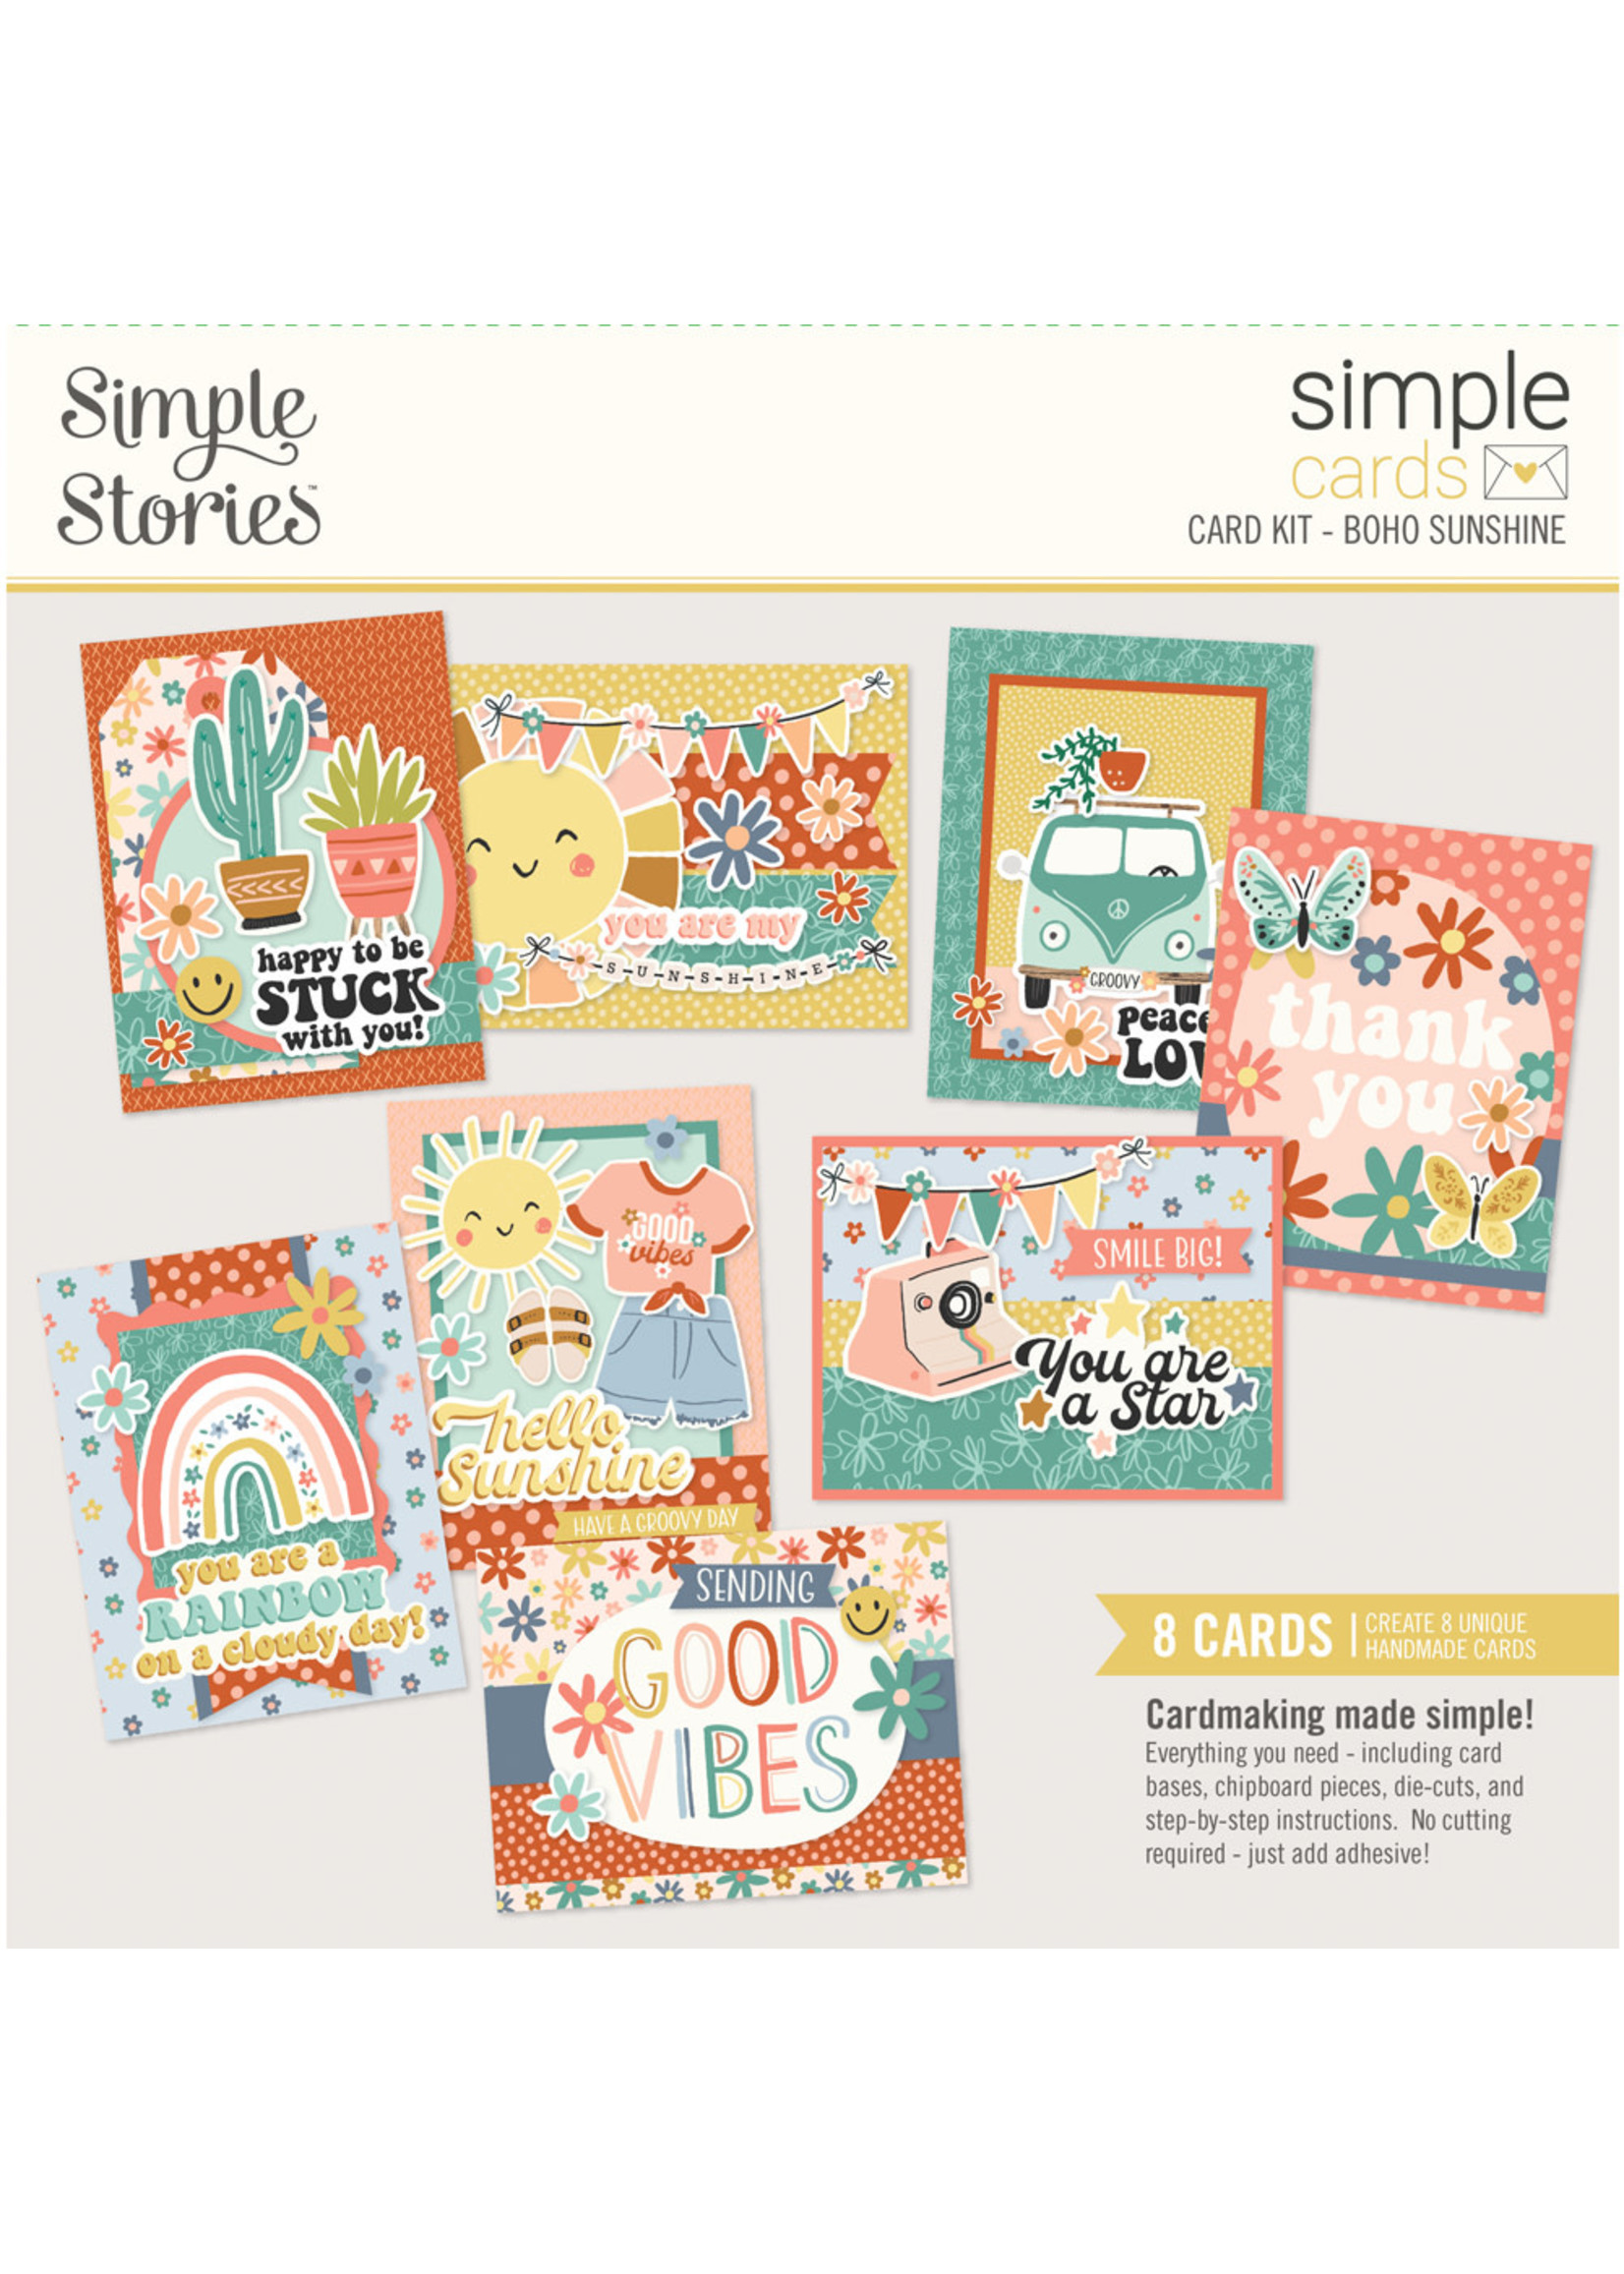 Simple Stories Boho Sunshine- Simple Cards Card Kit